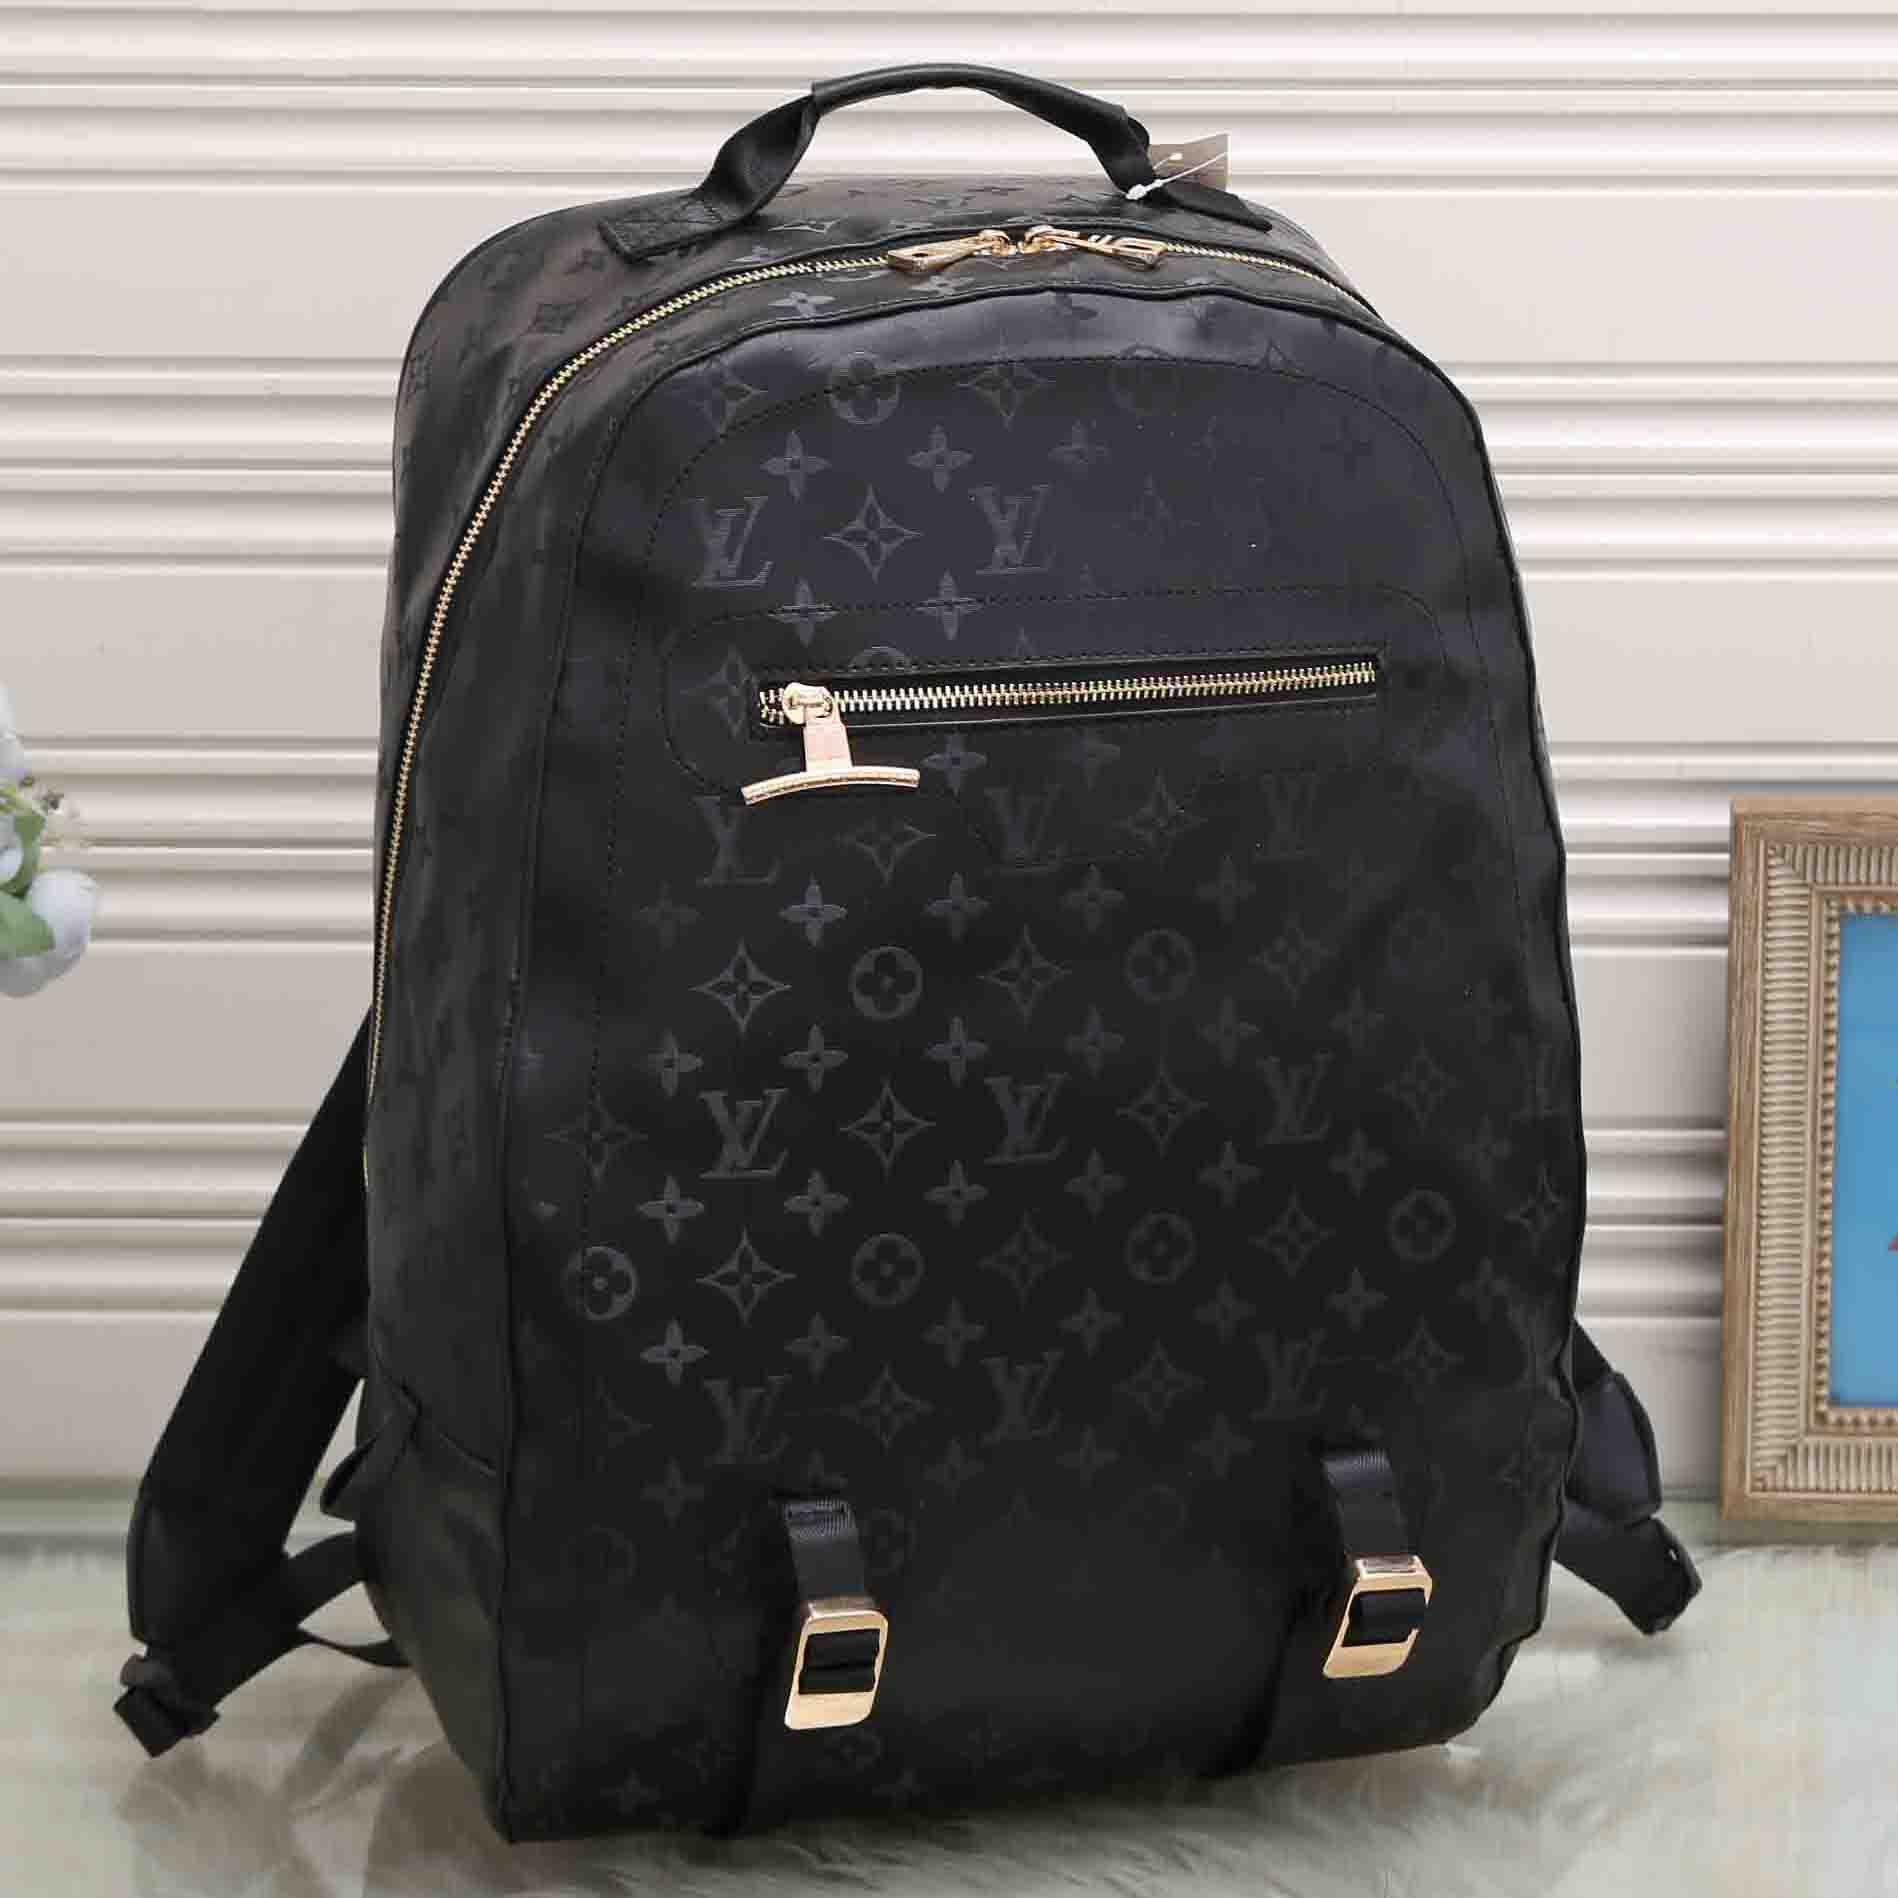 LV Louis Vuitton printed letter logo large capacity backpack school bag travel bag Daypack